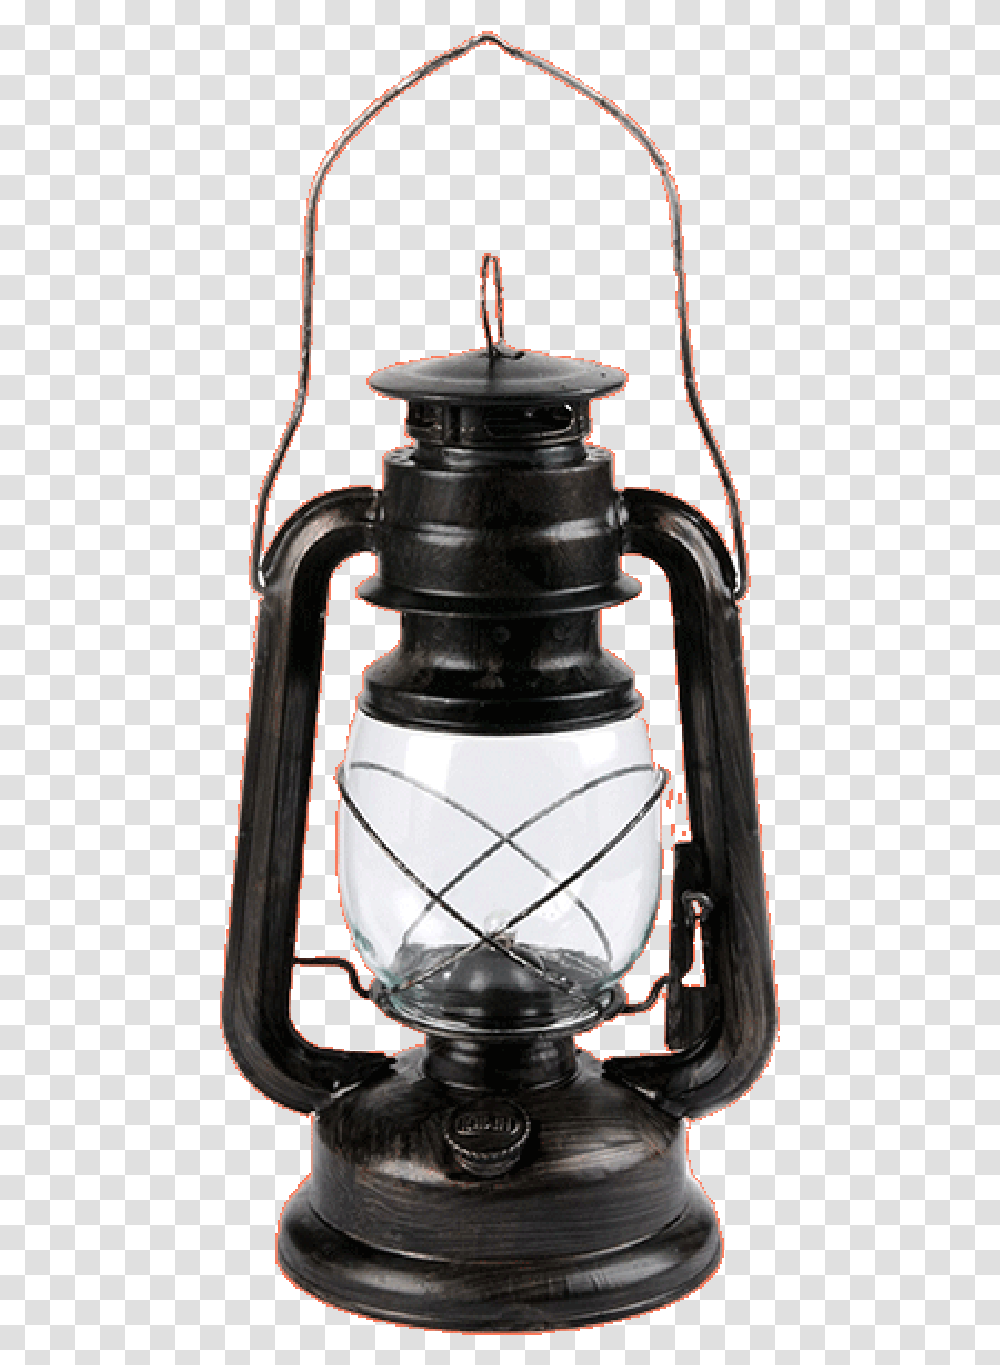 Lamp Oil Lighting Kerosene Lantern Free Clipart Hq, Lampshade Transparent Png